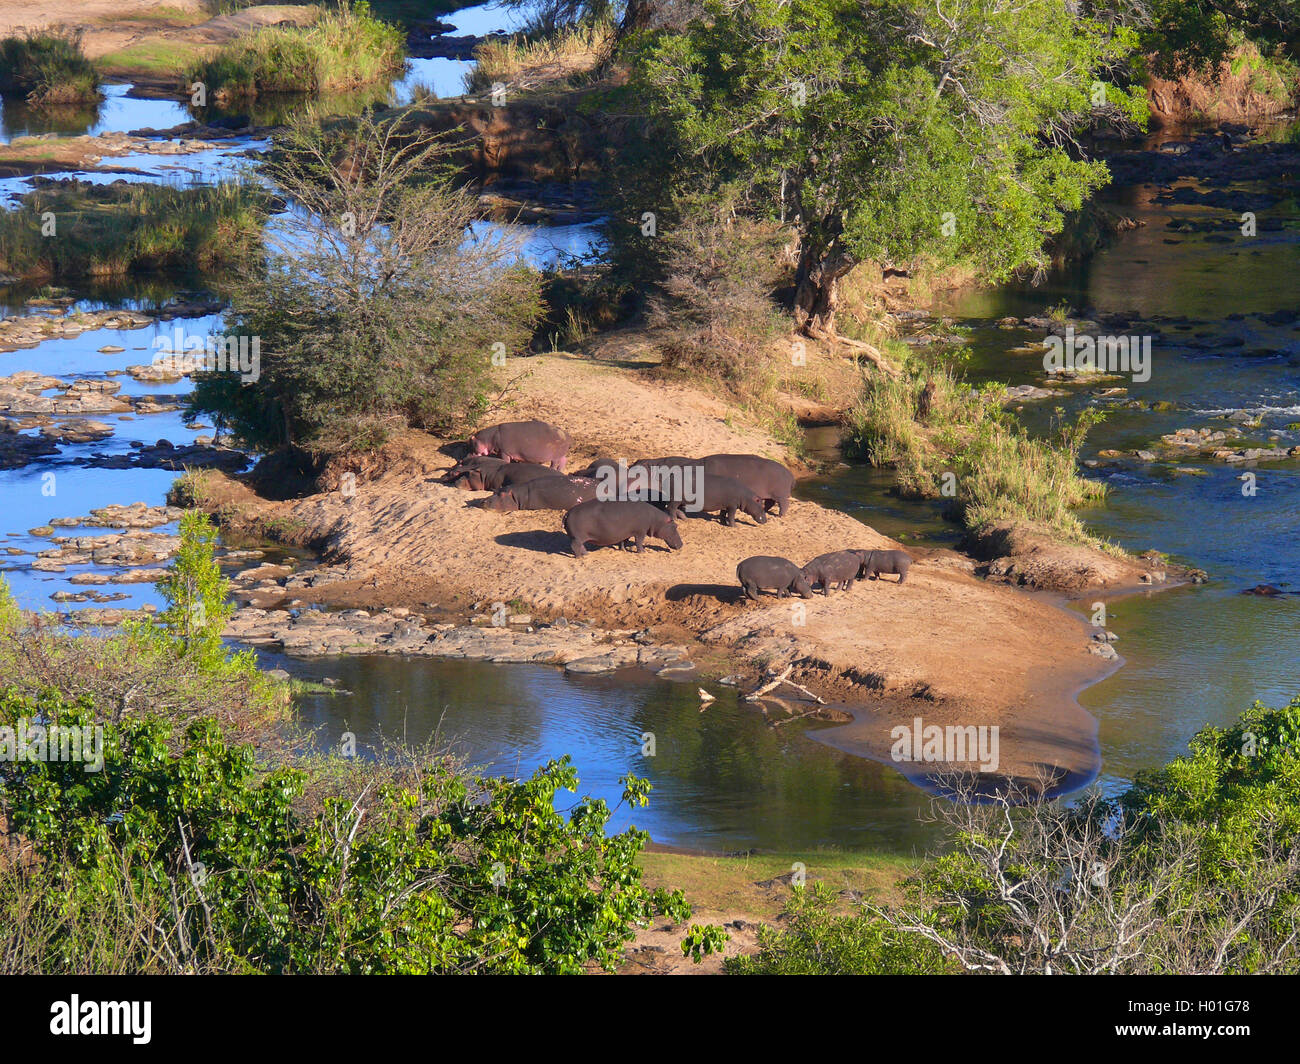 hippopotamus, hippo, Common hippopotamus (Hippopotamus amphibius), hippos on a sandbank in Olifants River, South Africa, Krueger National Park Stock Photo